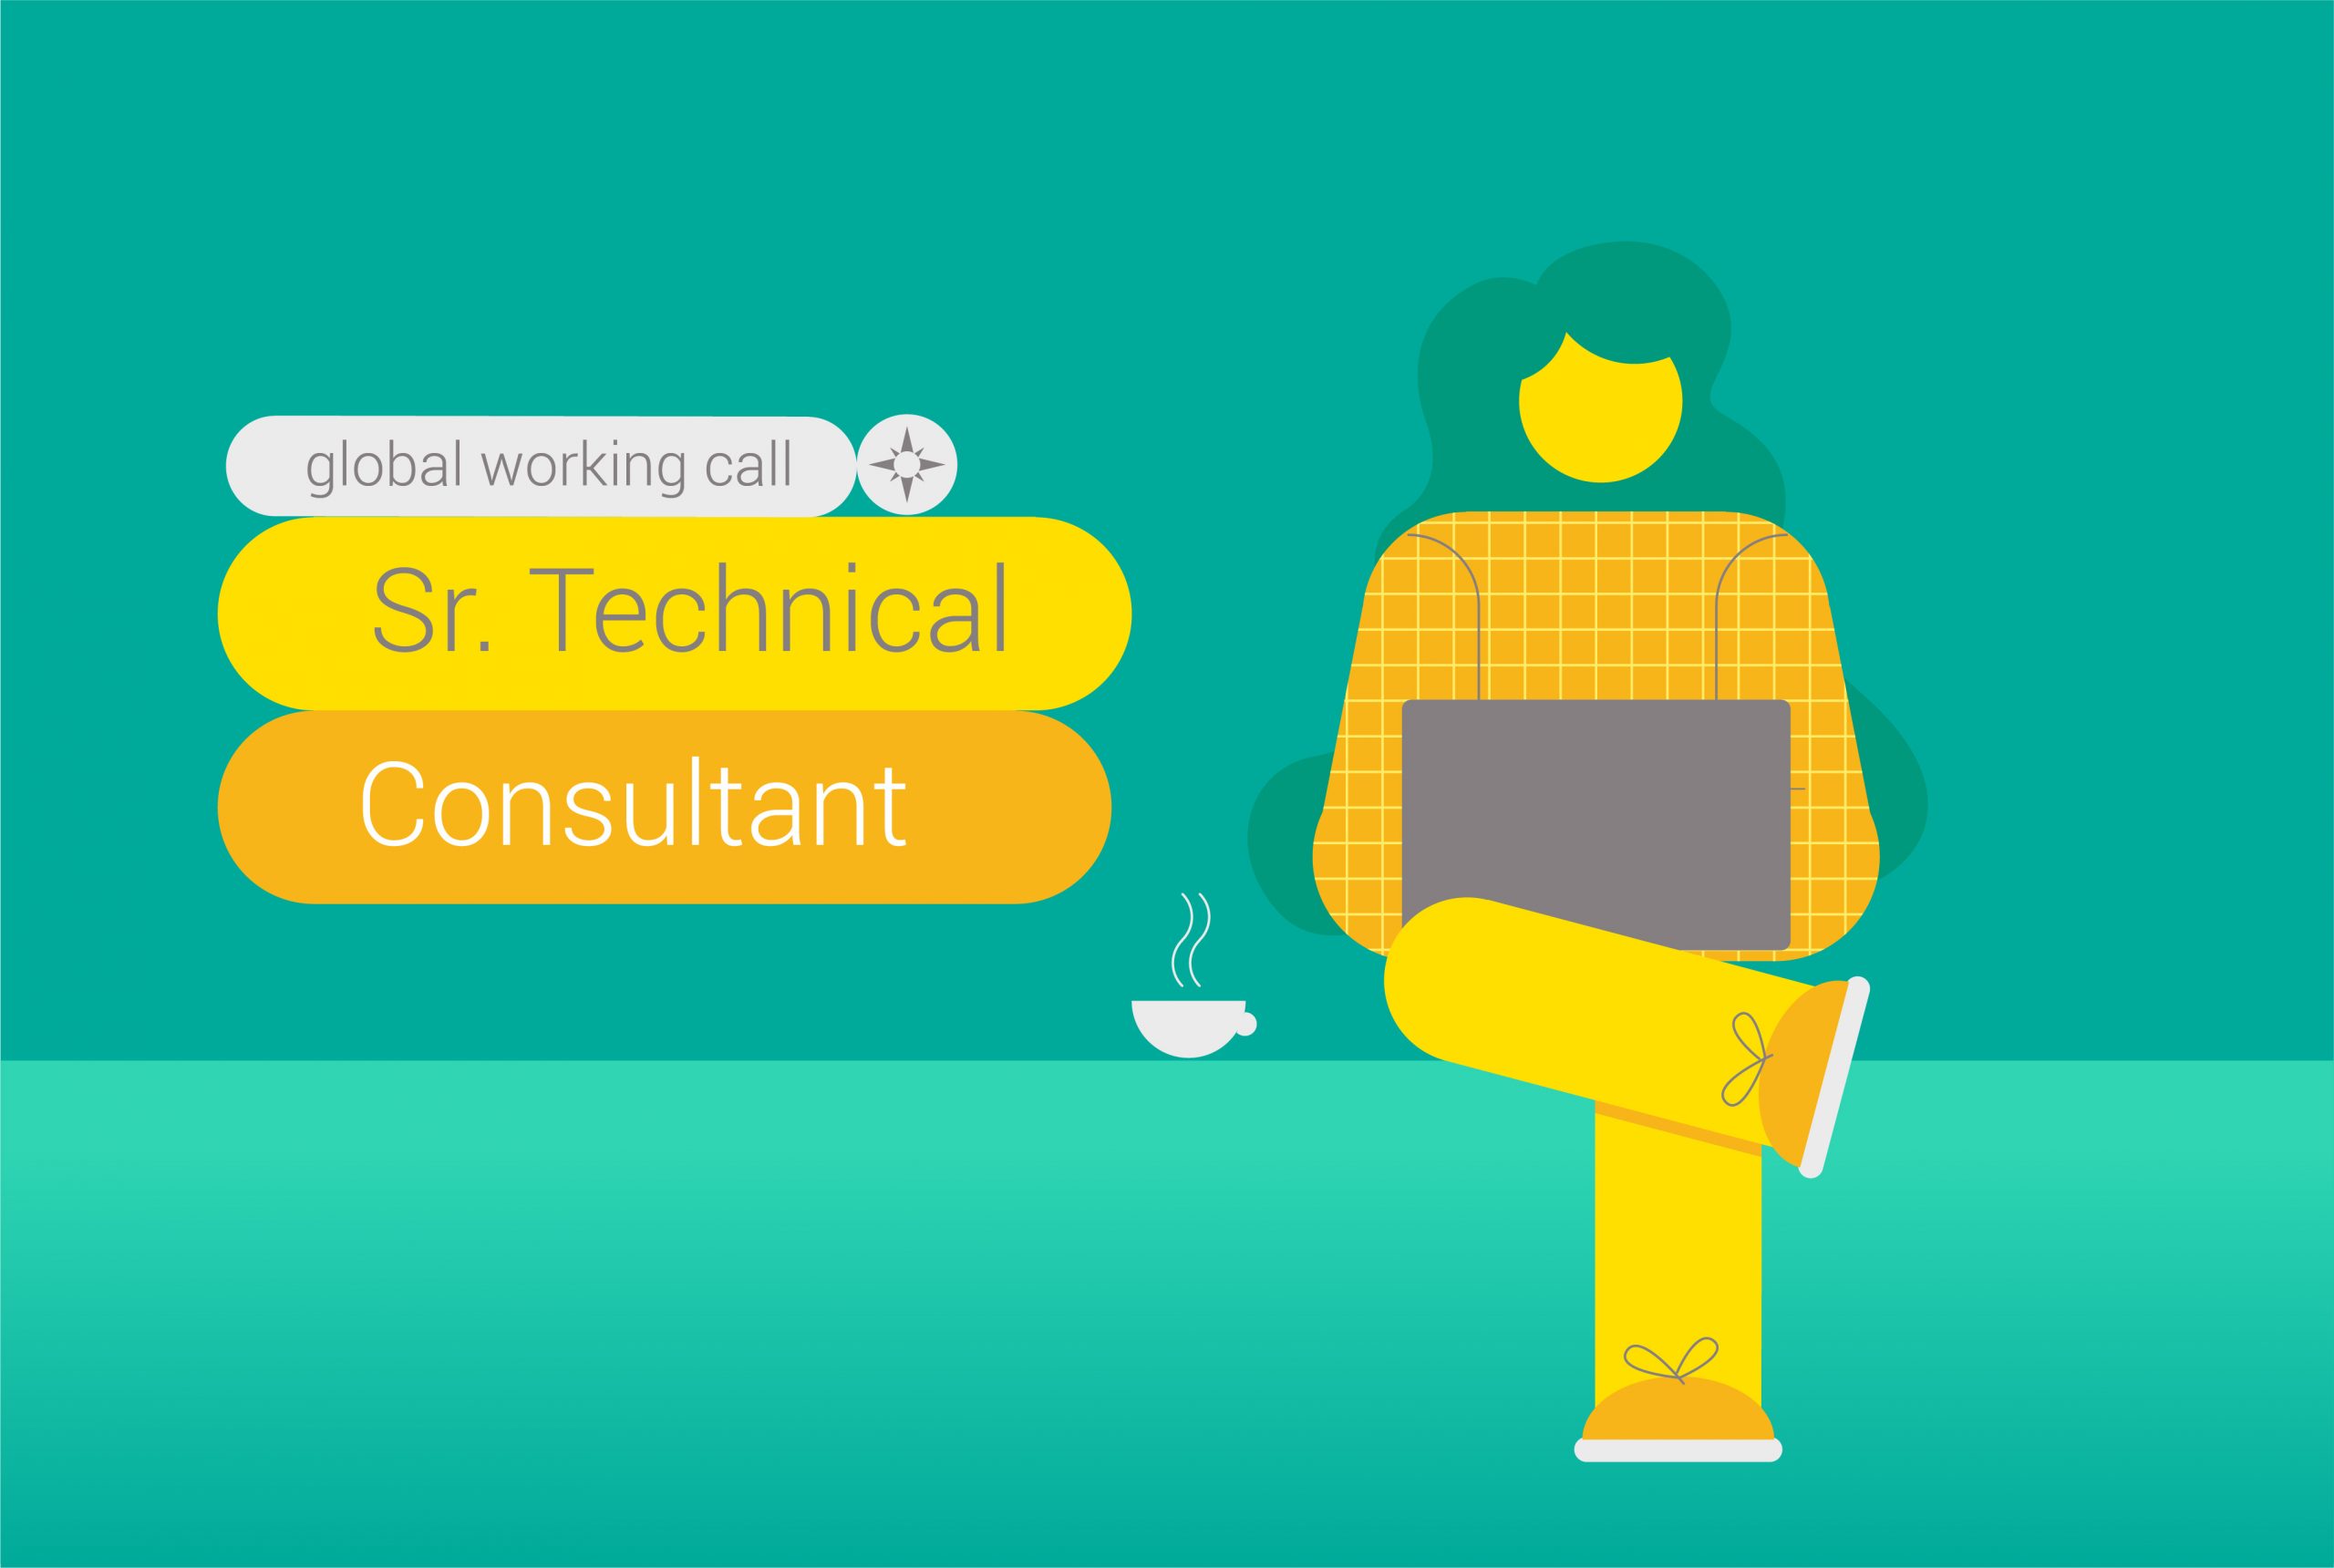 Sr. Technical Consultant